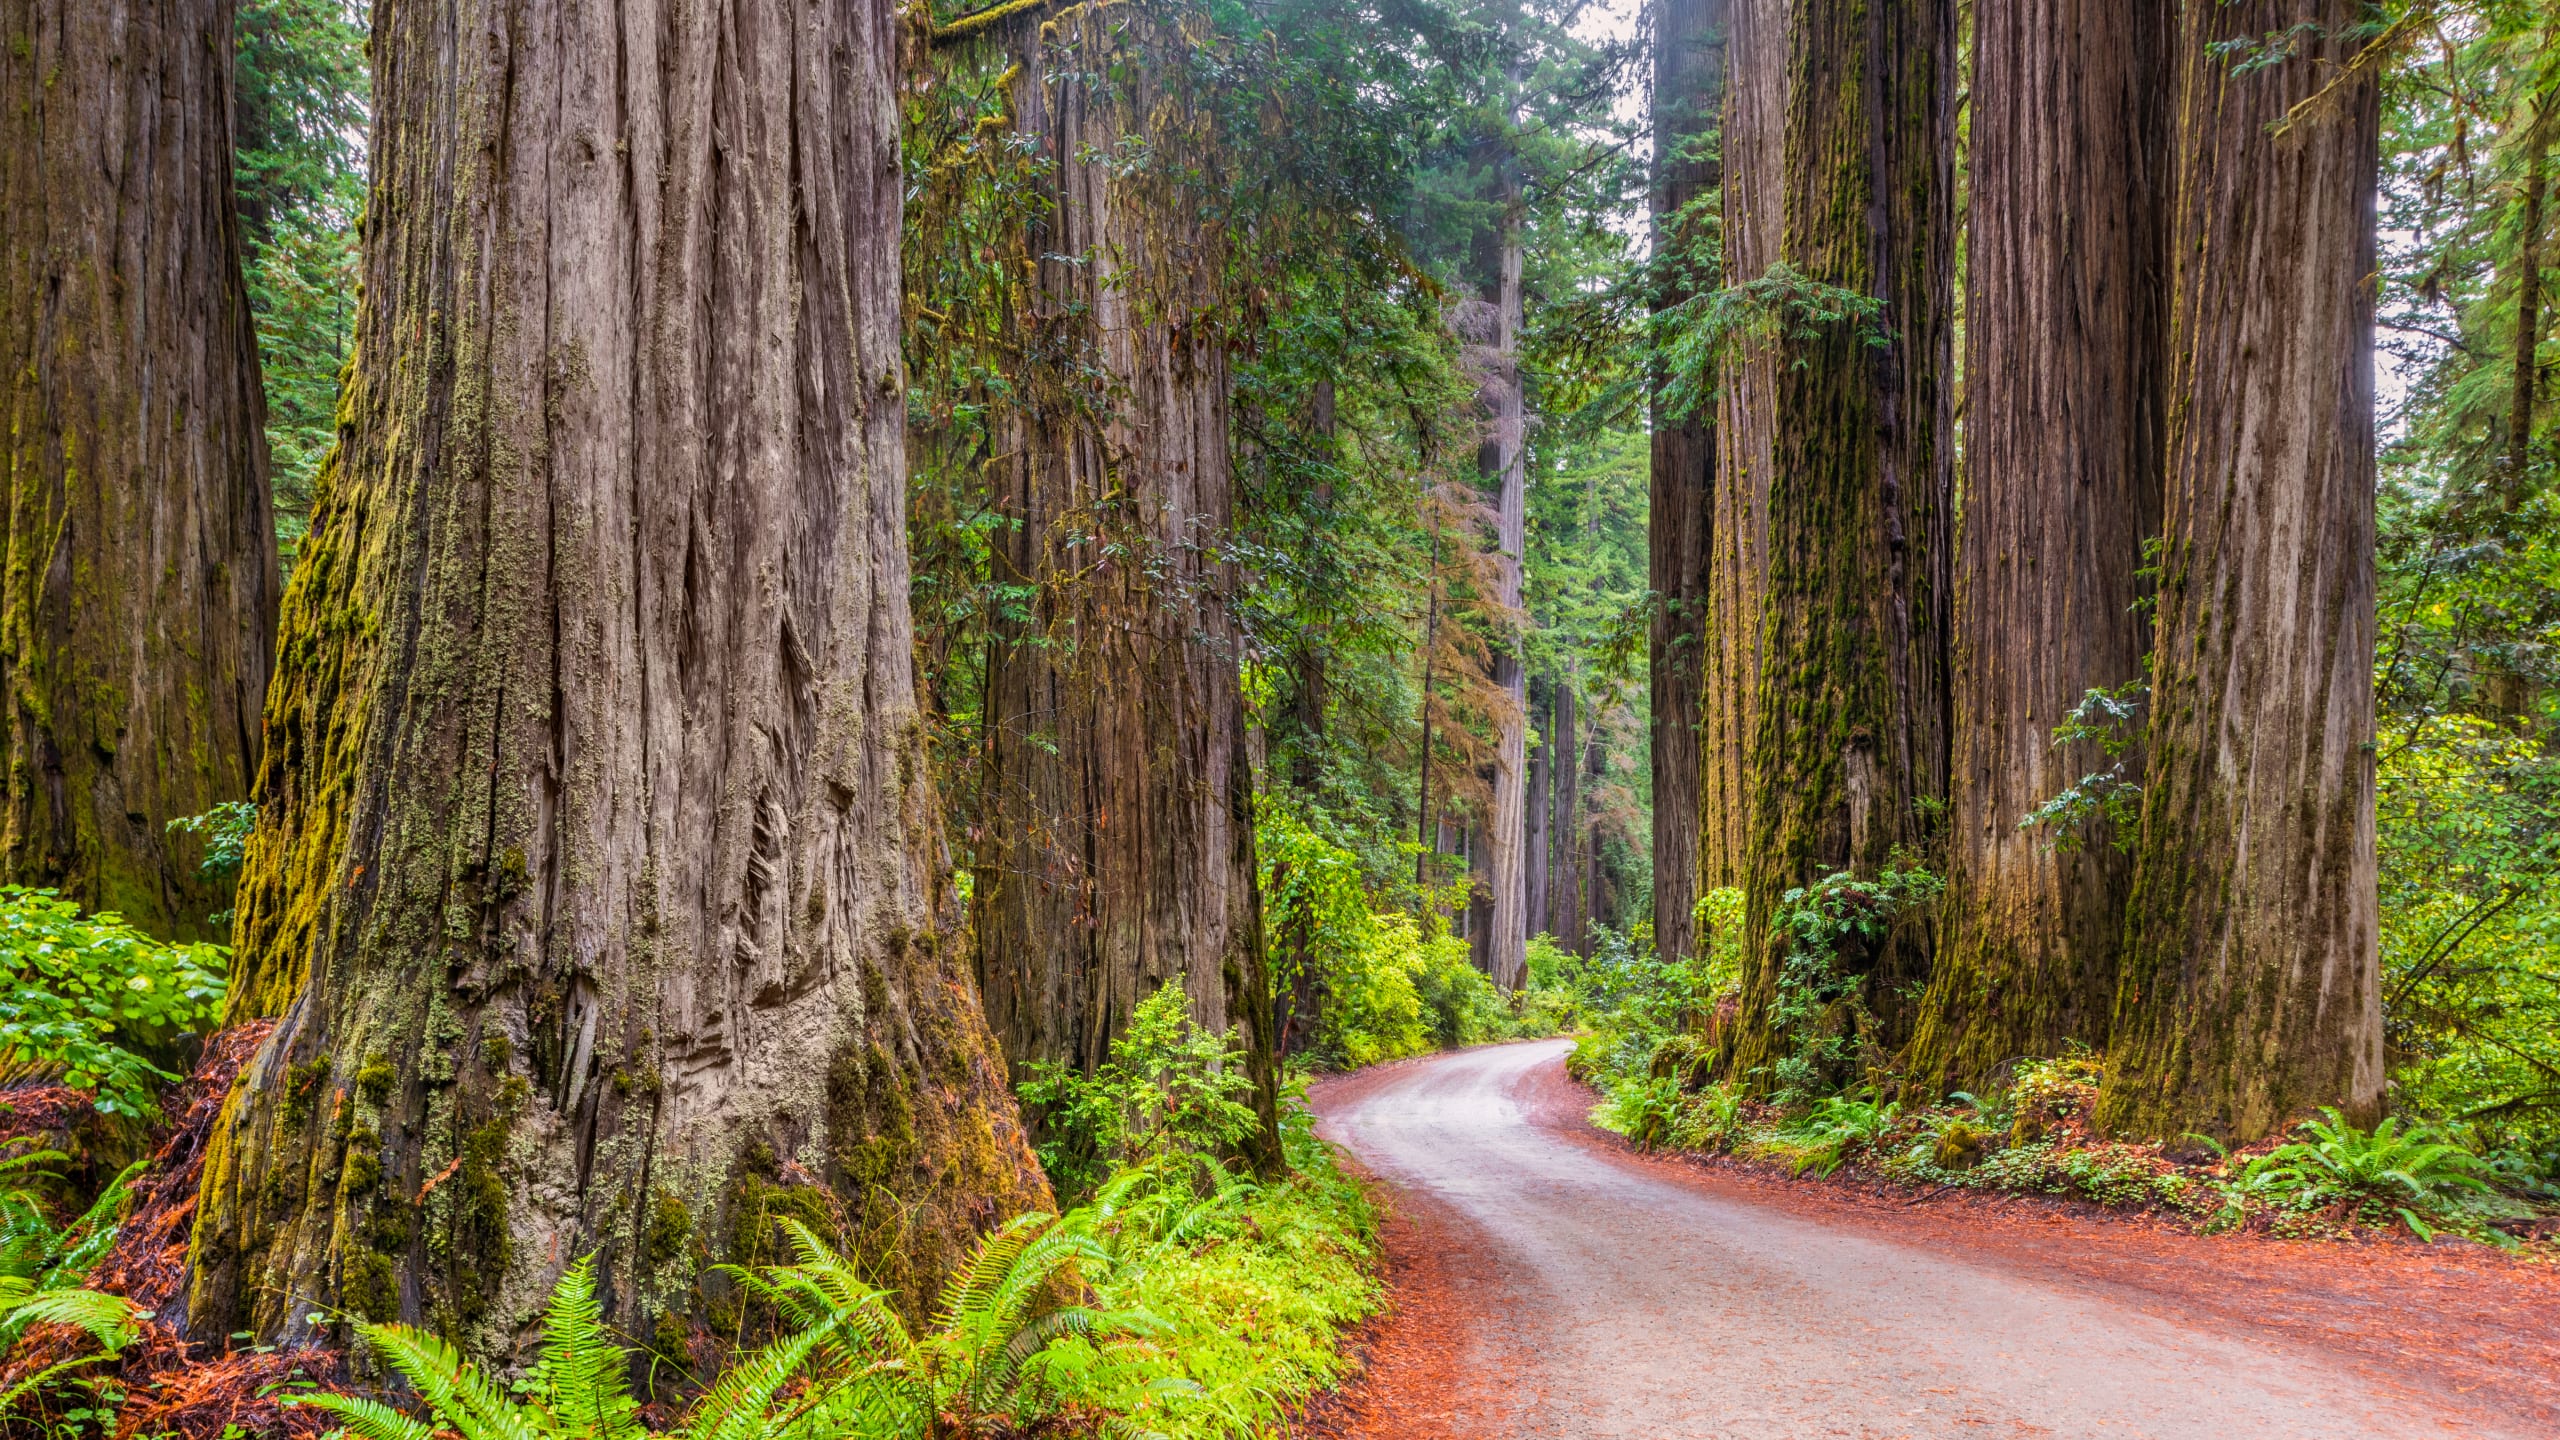 Redwood Tree Falls on Car, Kills Parents of 5 Children in Northern California